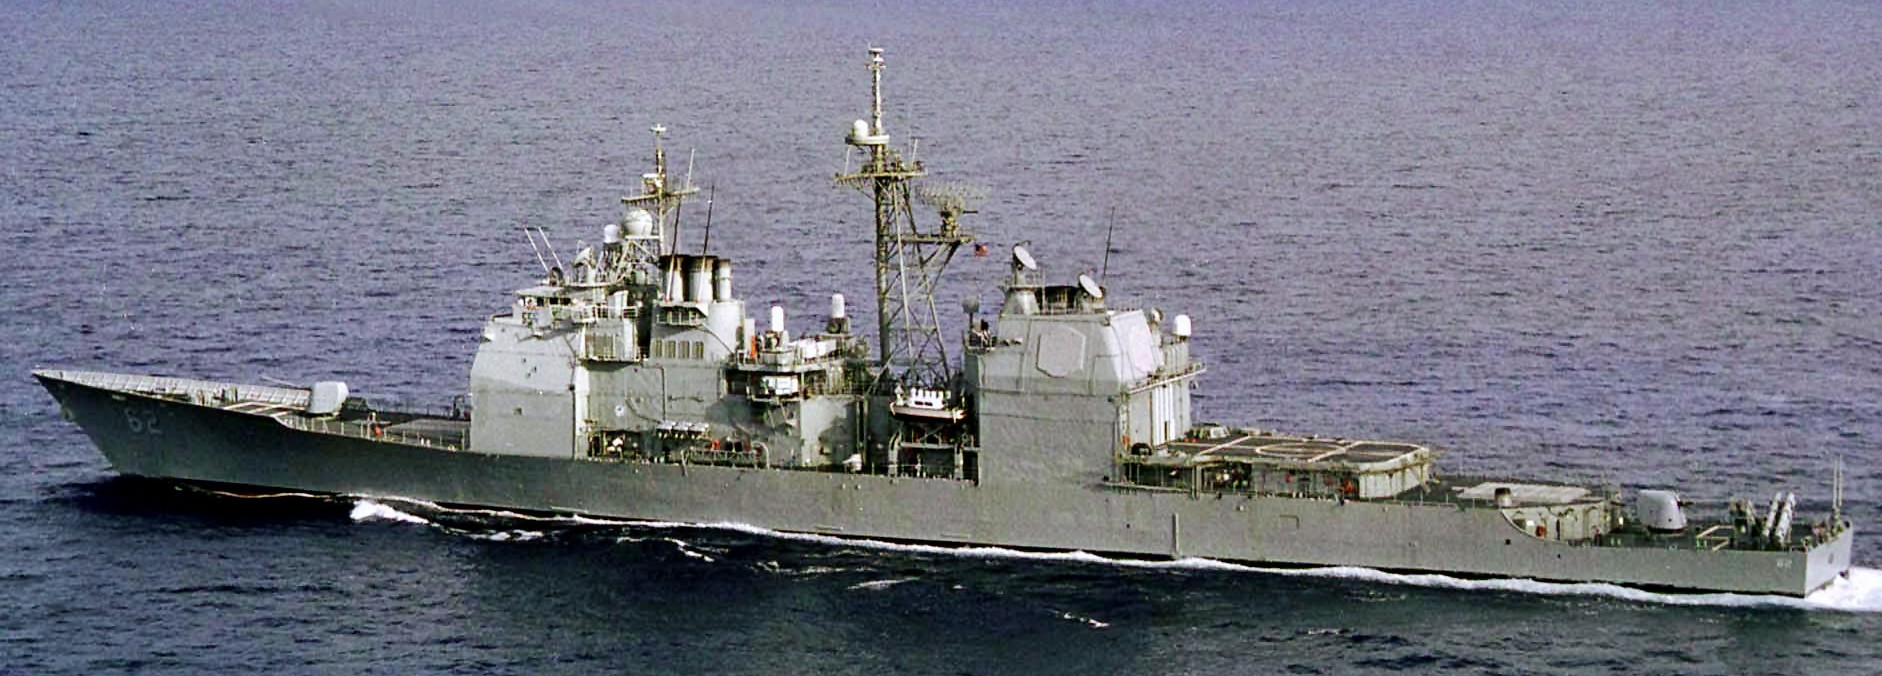 cg-62 uss chancellorsville ticonderoga class guided missile cruiser aegis us navy 129